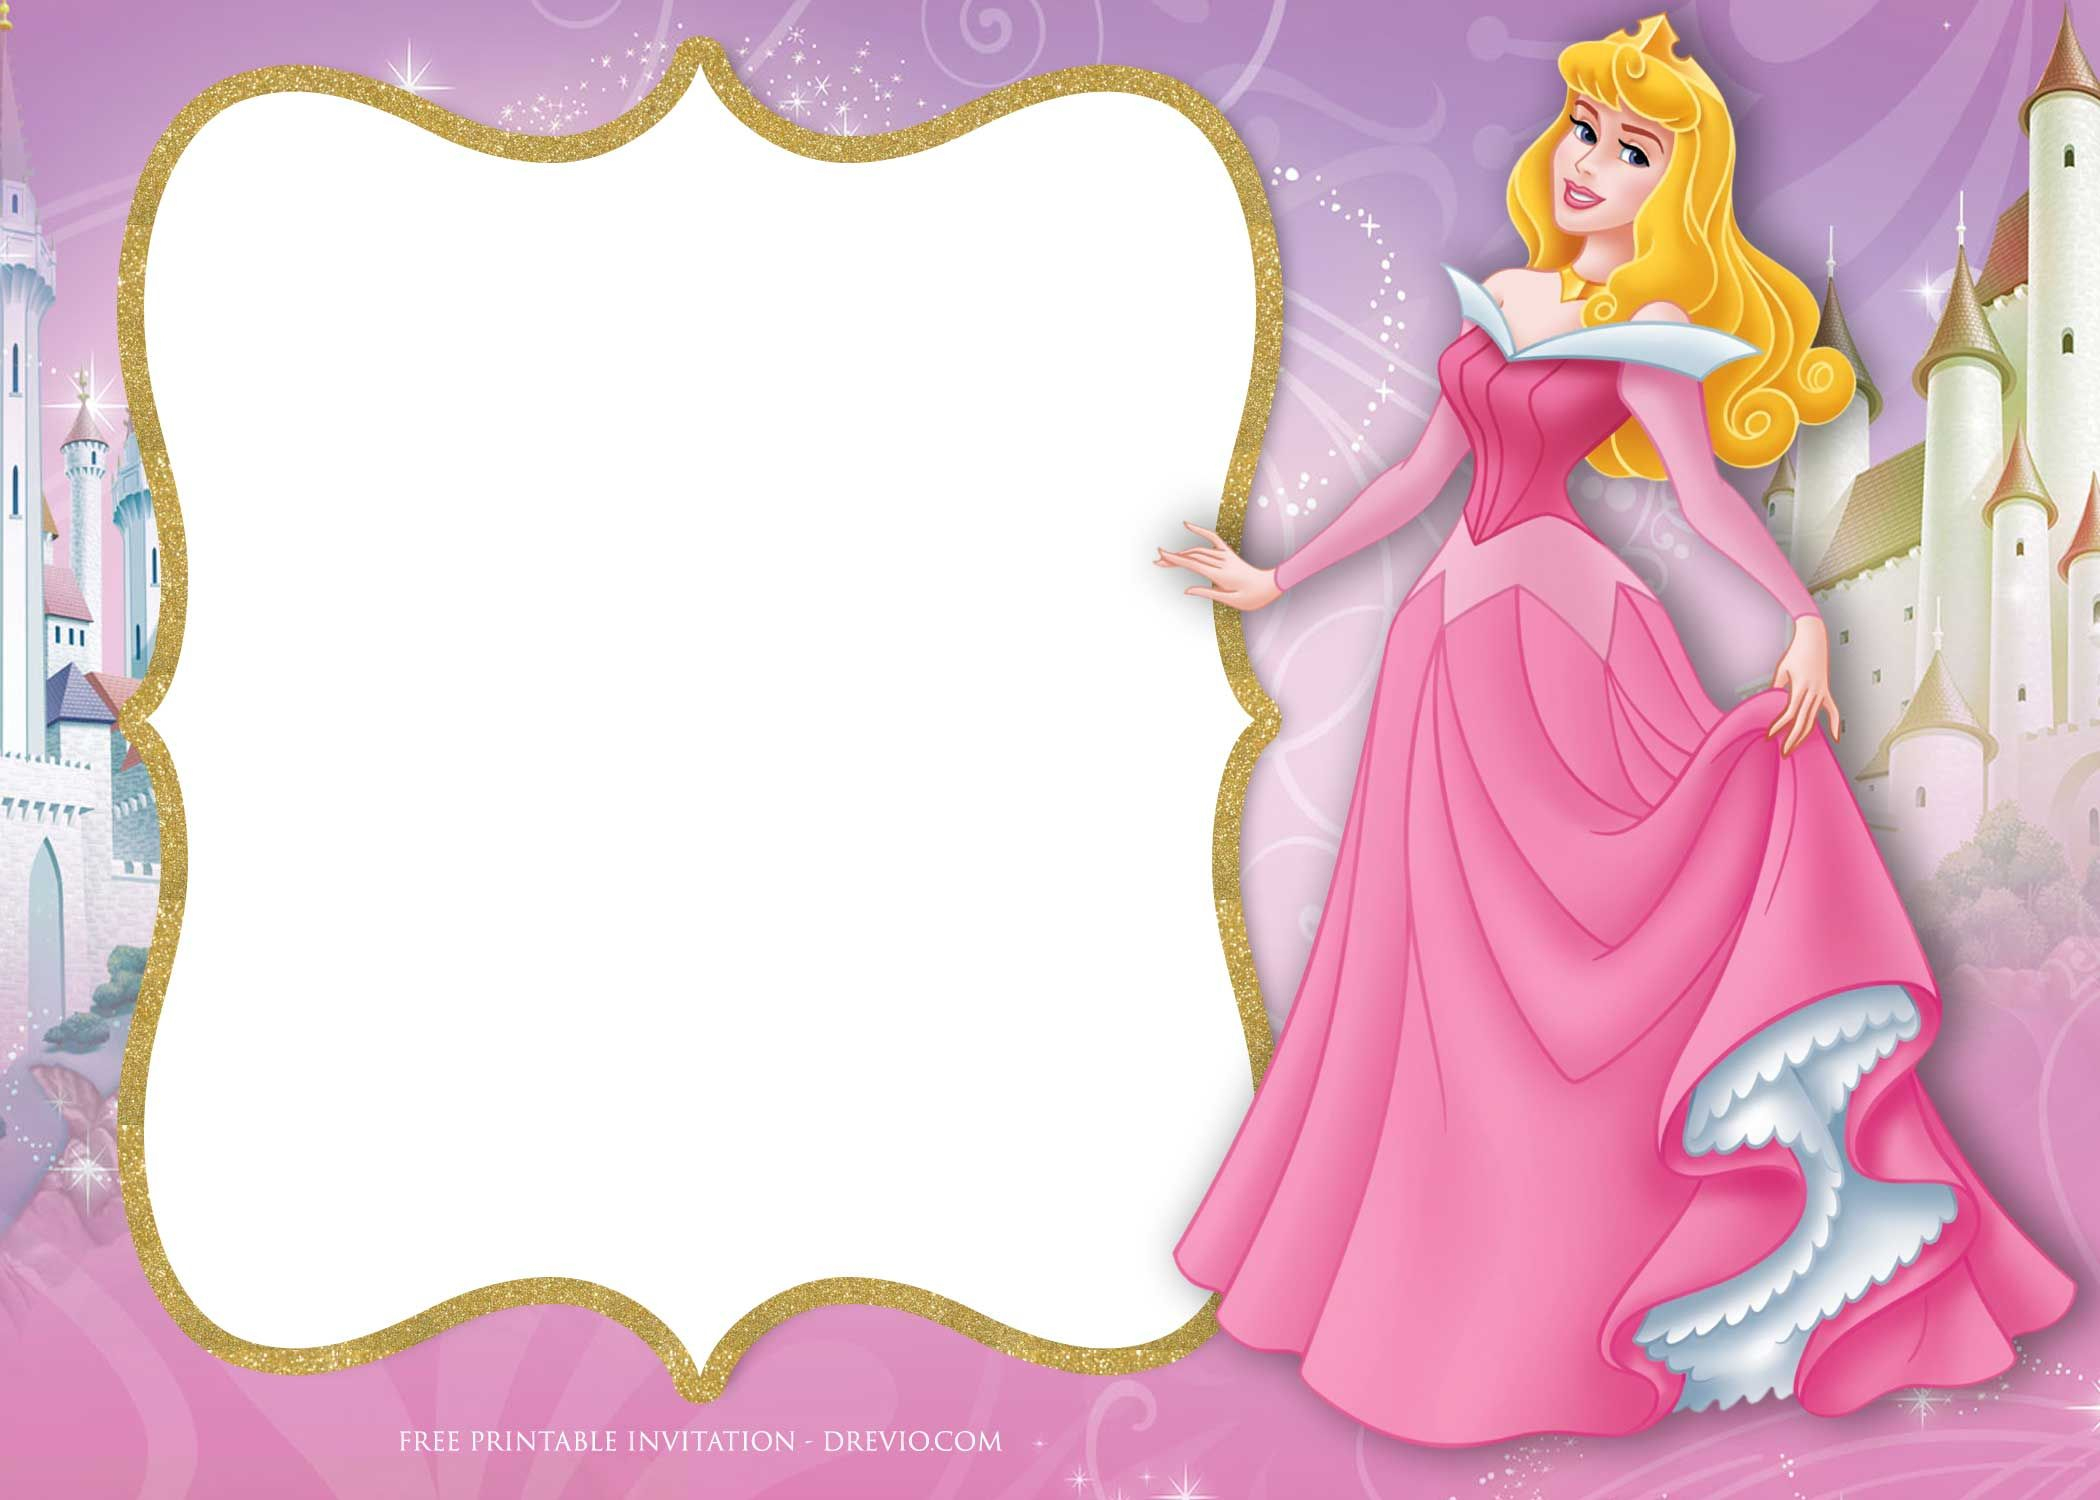 Free Printable Princess Aurora Sleeping Beauty Invitation - Free Princess Printable Invitations